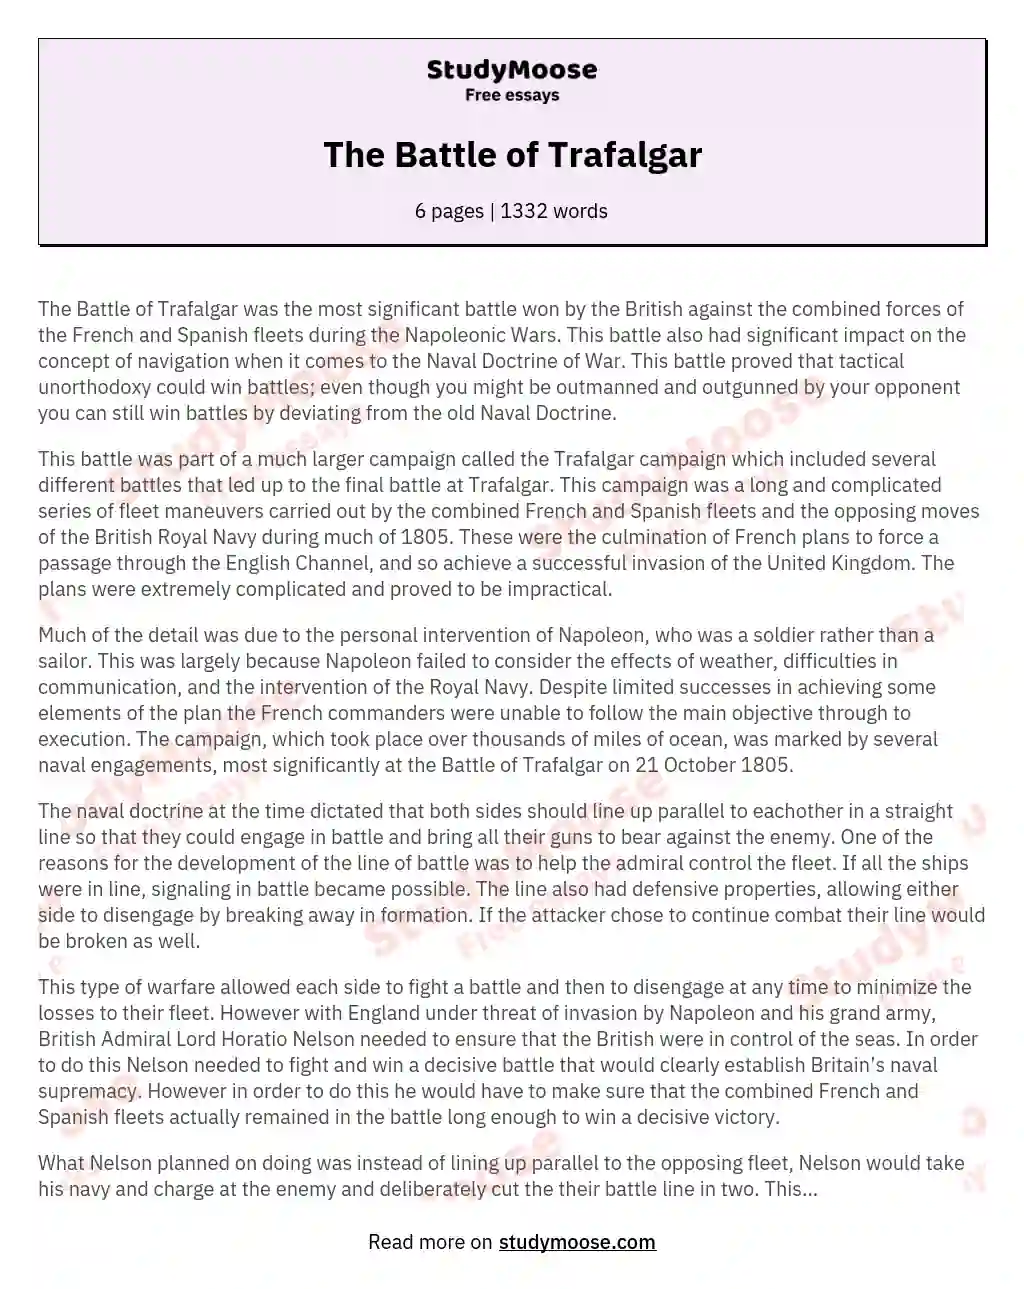 Revolutionizing Naval Warfare: The Battle of Trafalgar's Impact essay